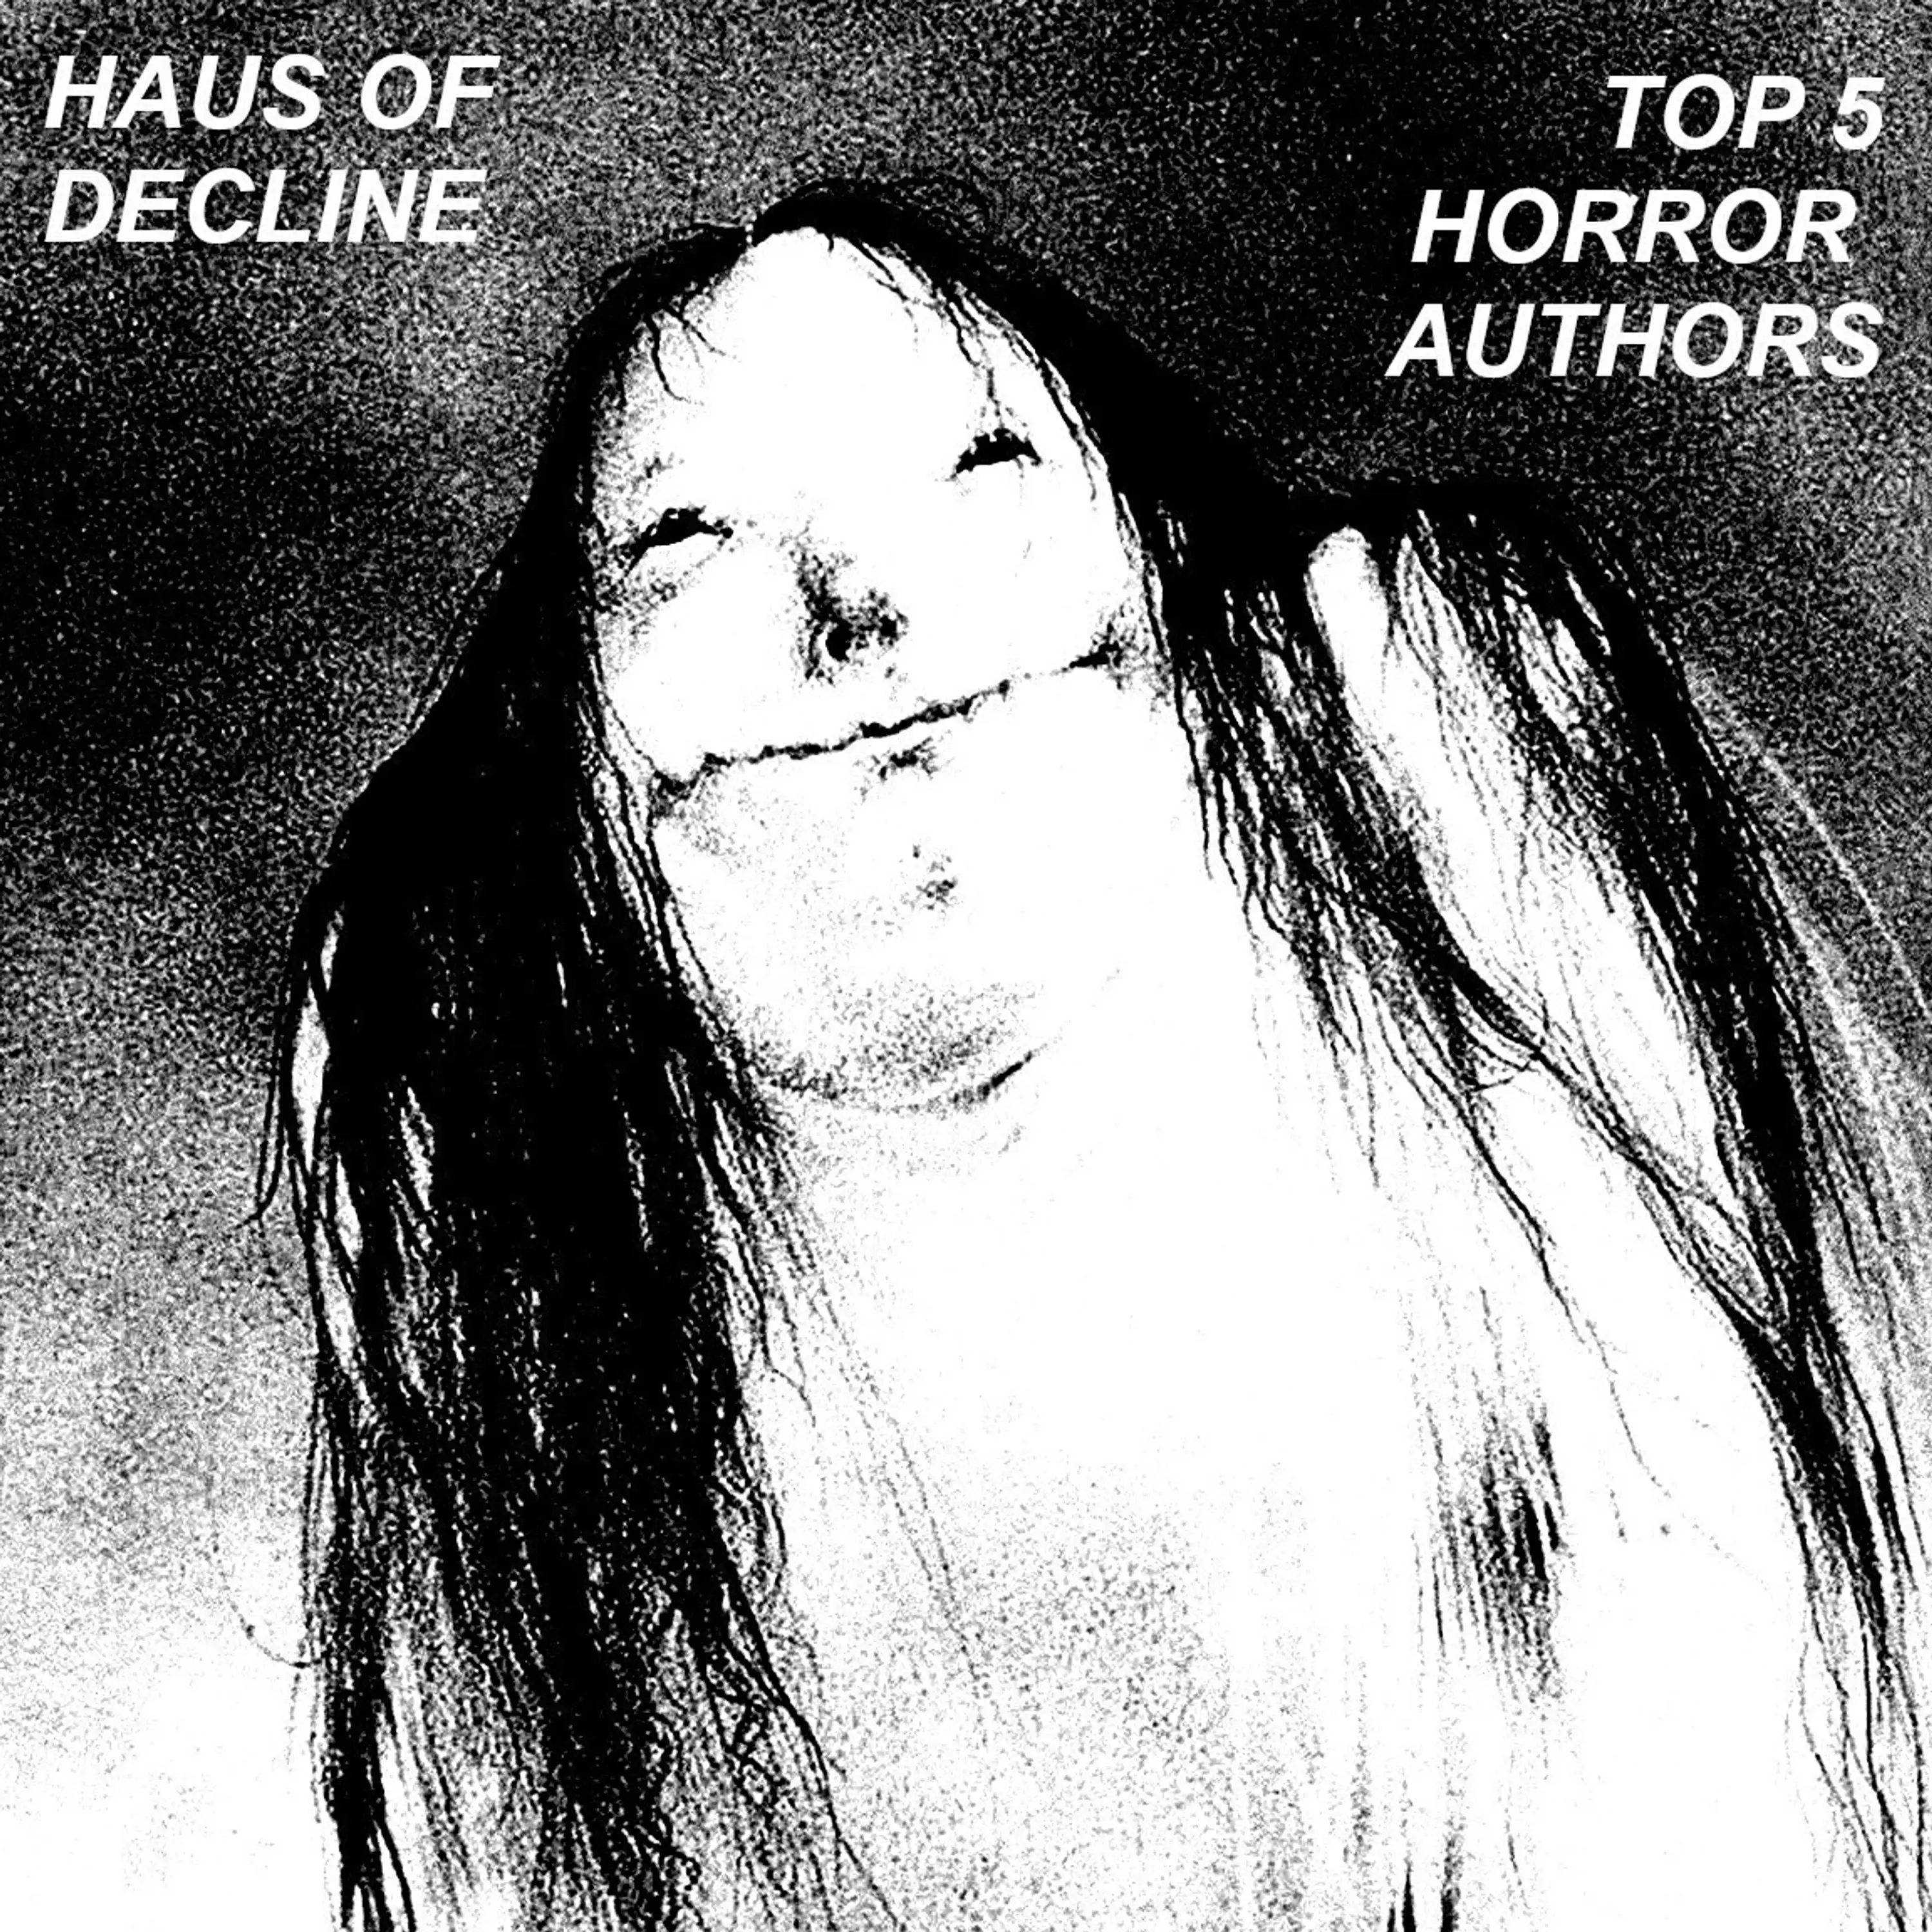 Top 5 Horror Authors